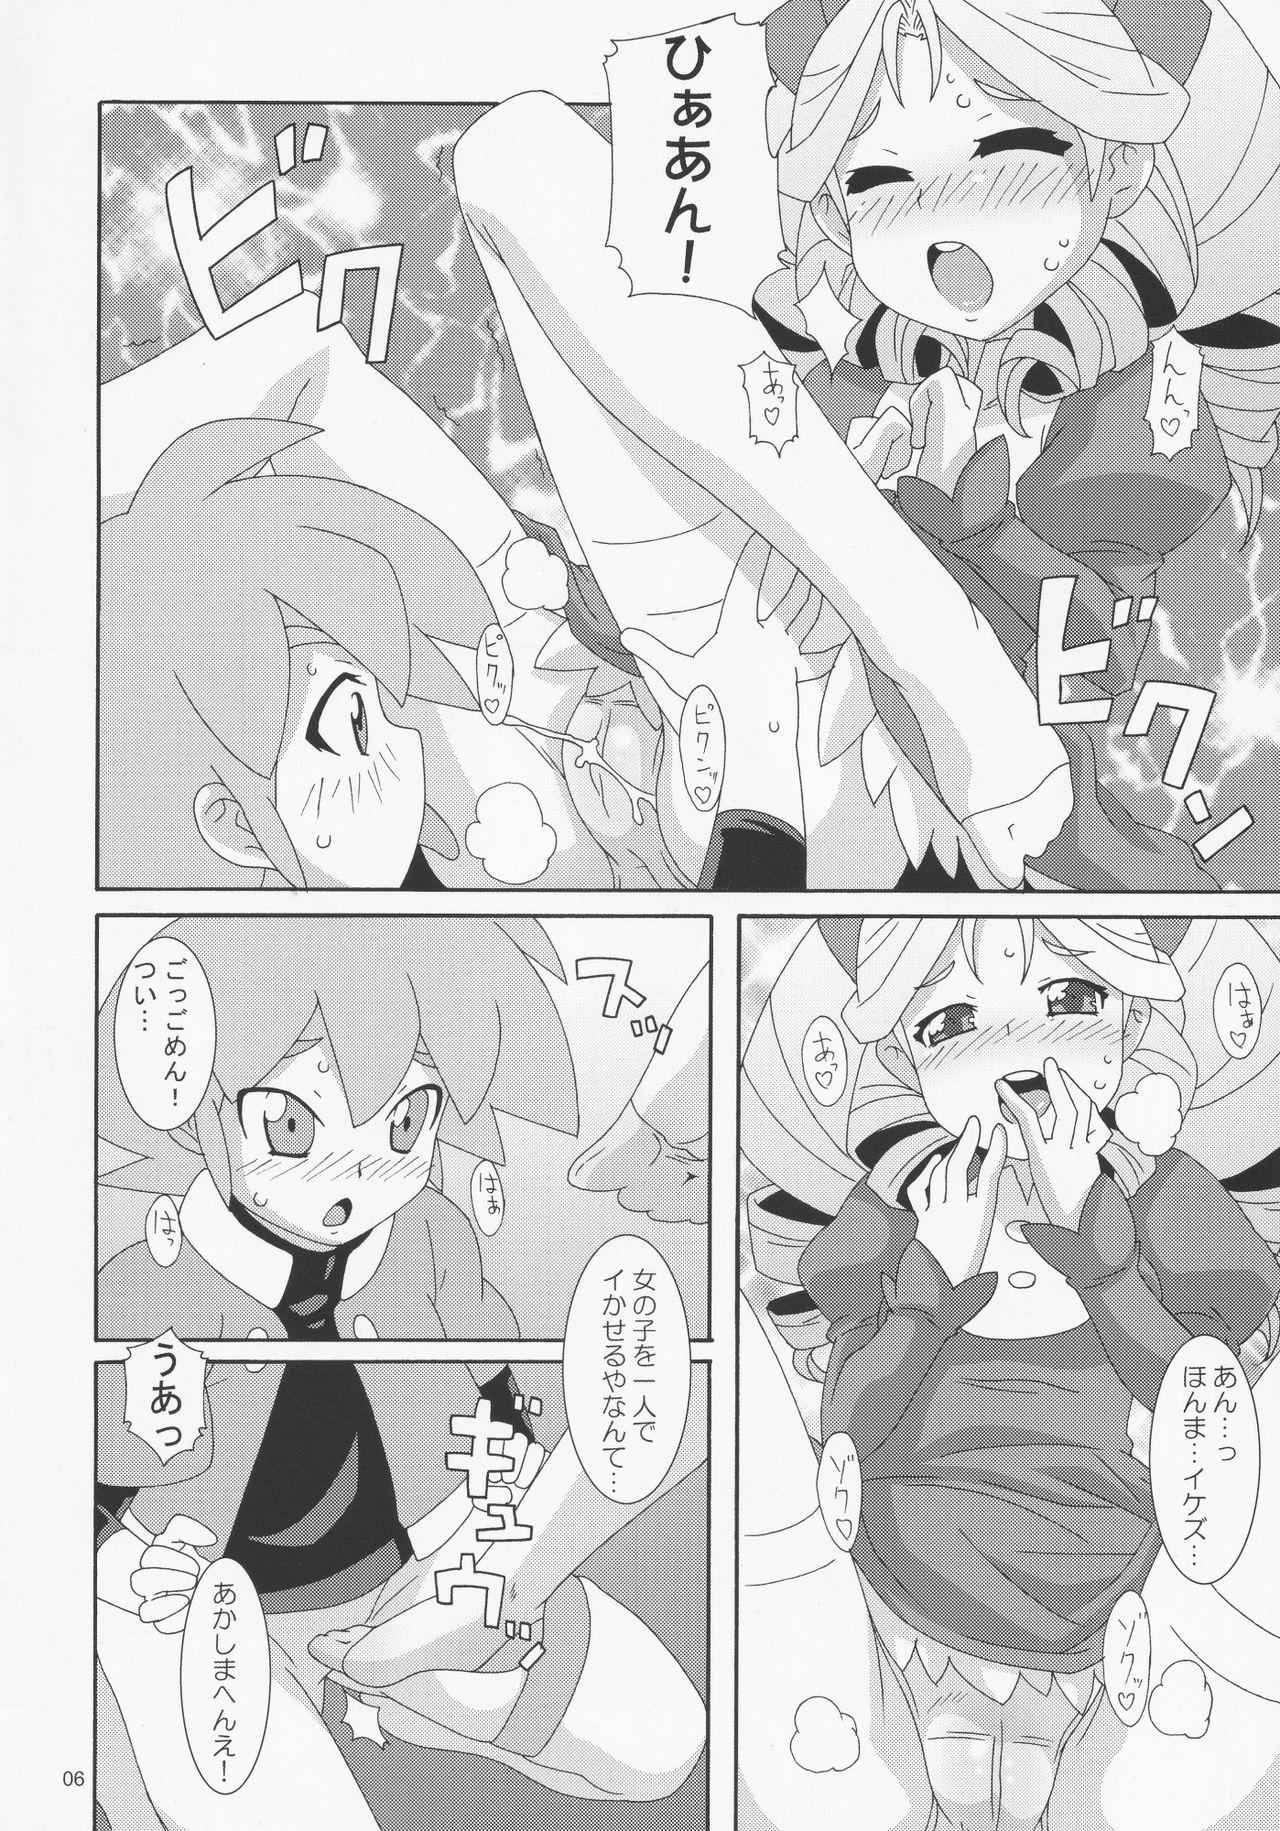 Messy Kyoka Gata - Battle spirits Daring - Page 5